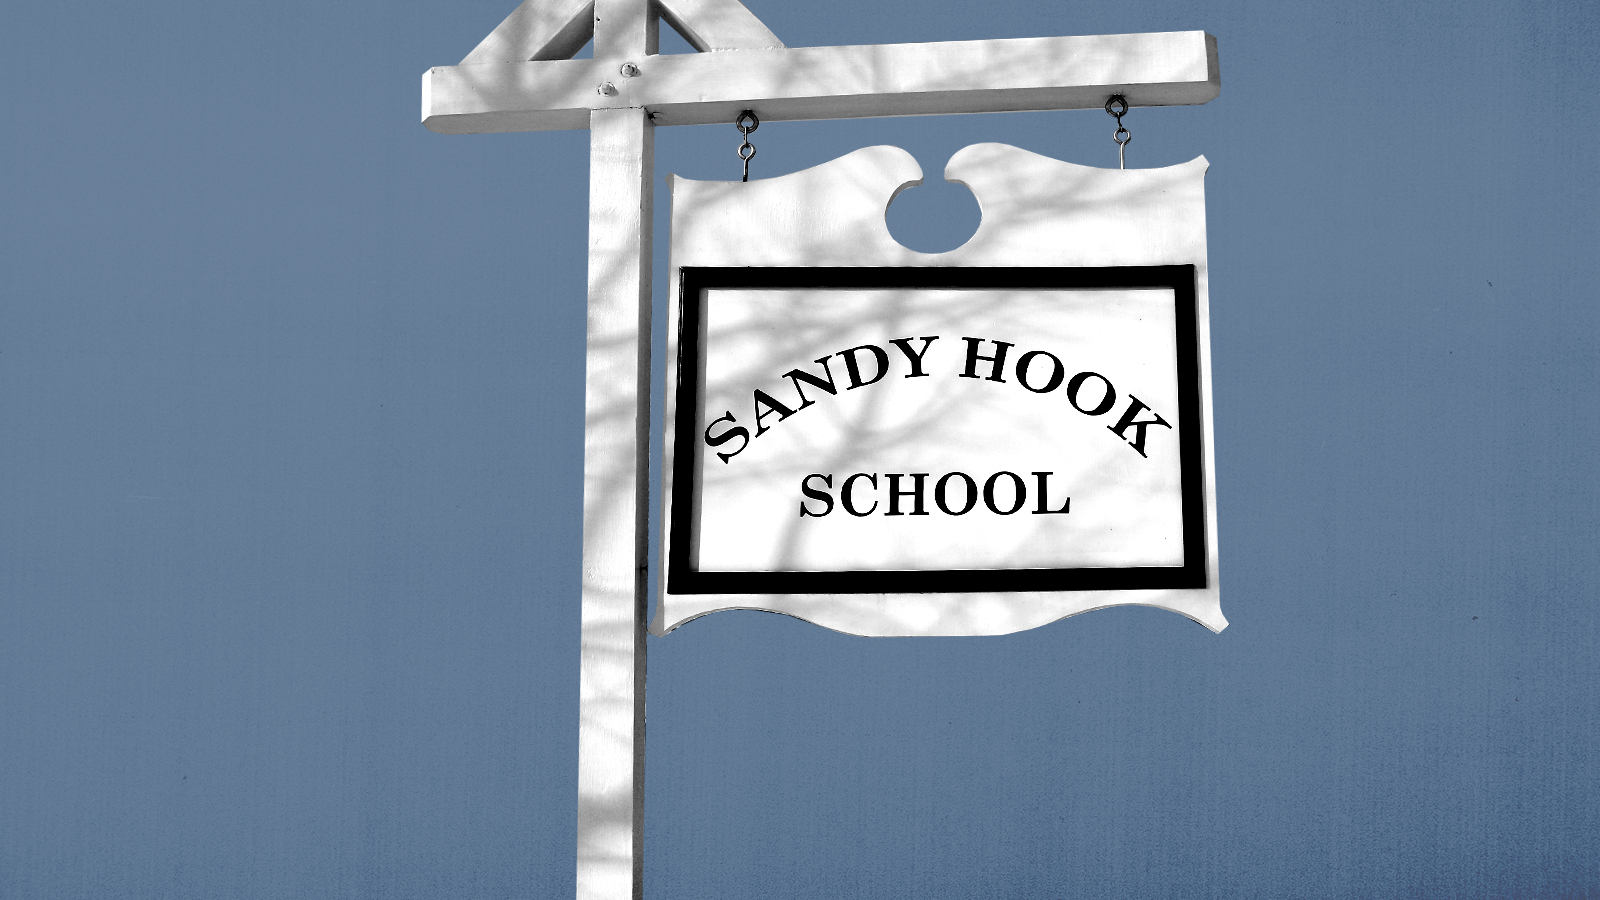 Sandy Hook.